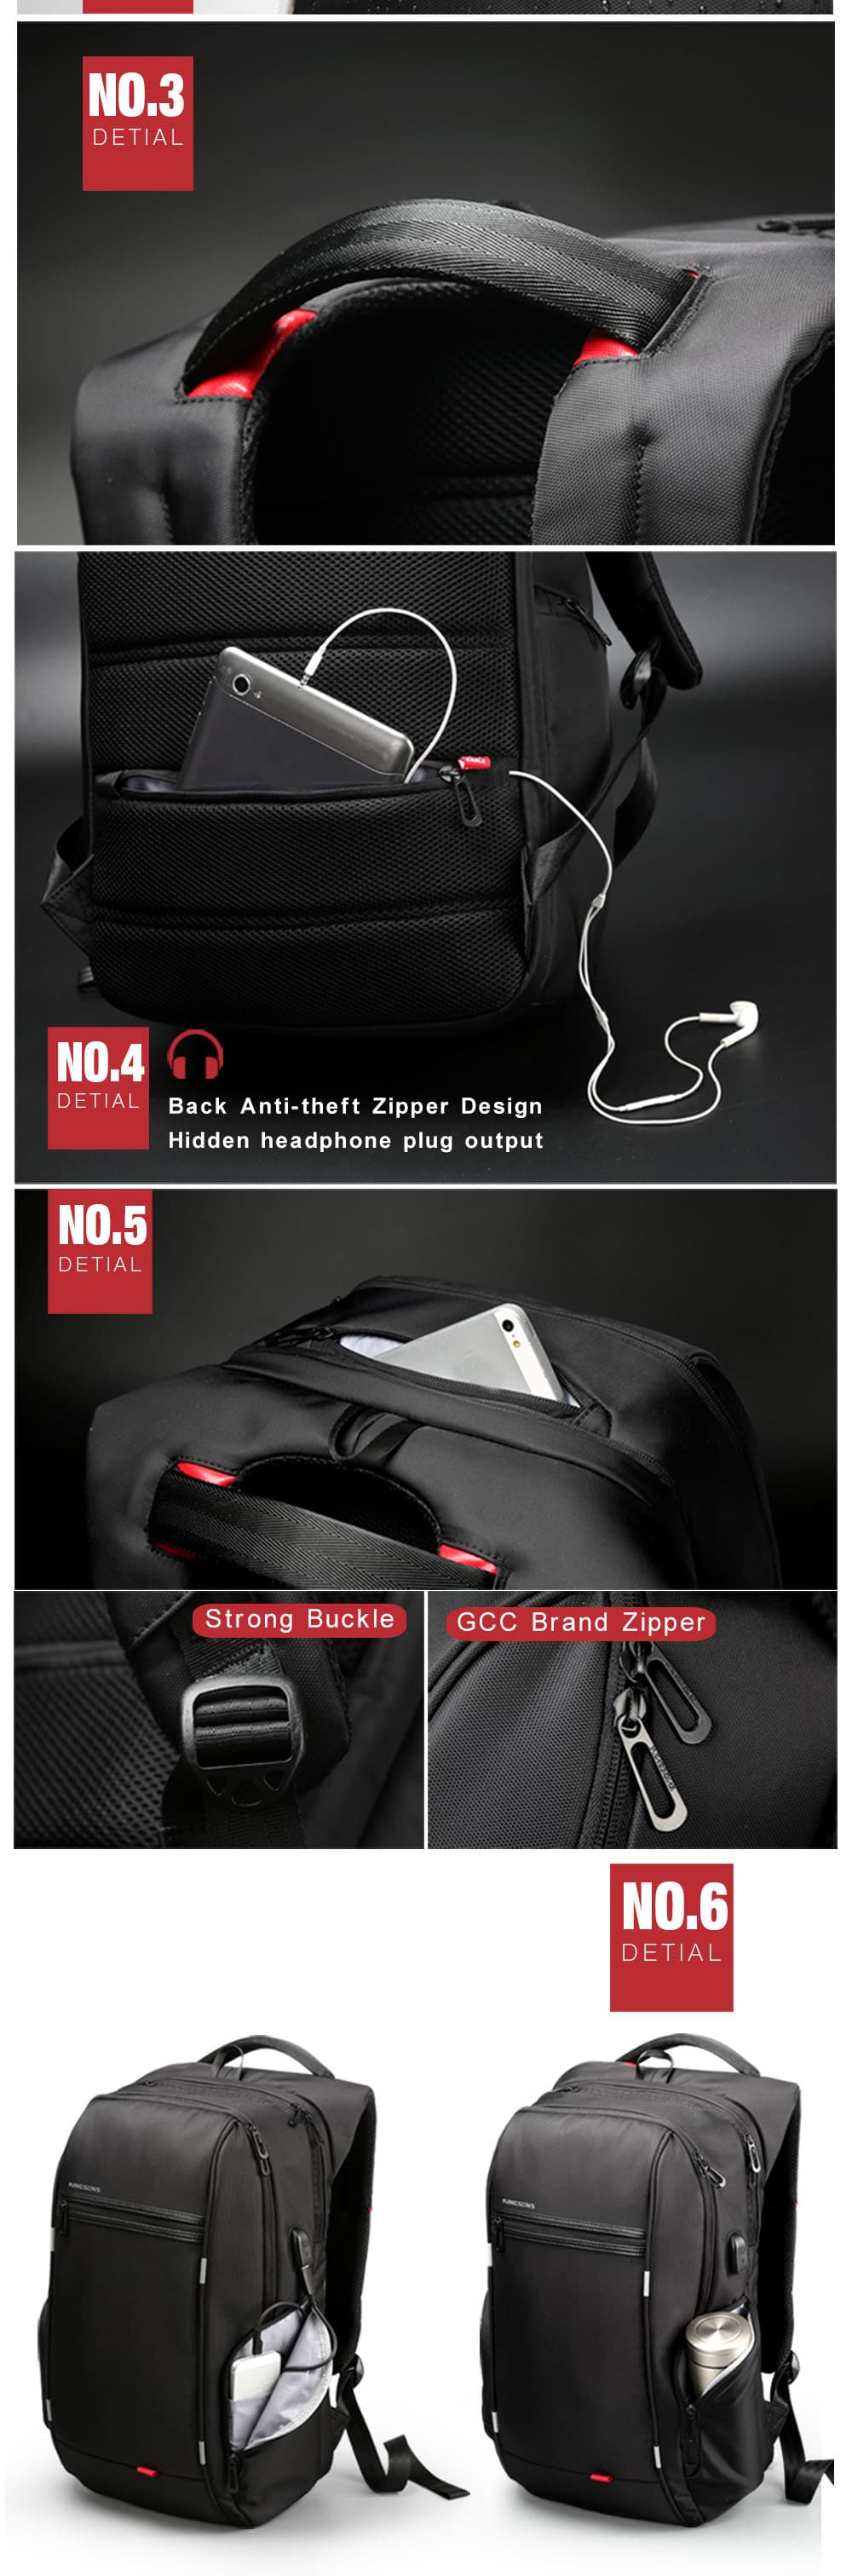 Kingsons KS3140W USB Charge Computer Backpacks Anti-Theft Waterproof Bags Fo Men- Black 15.6inch